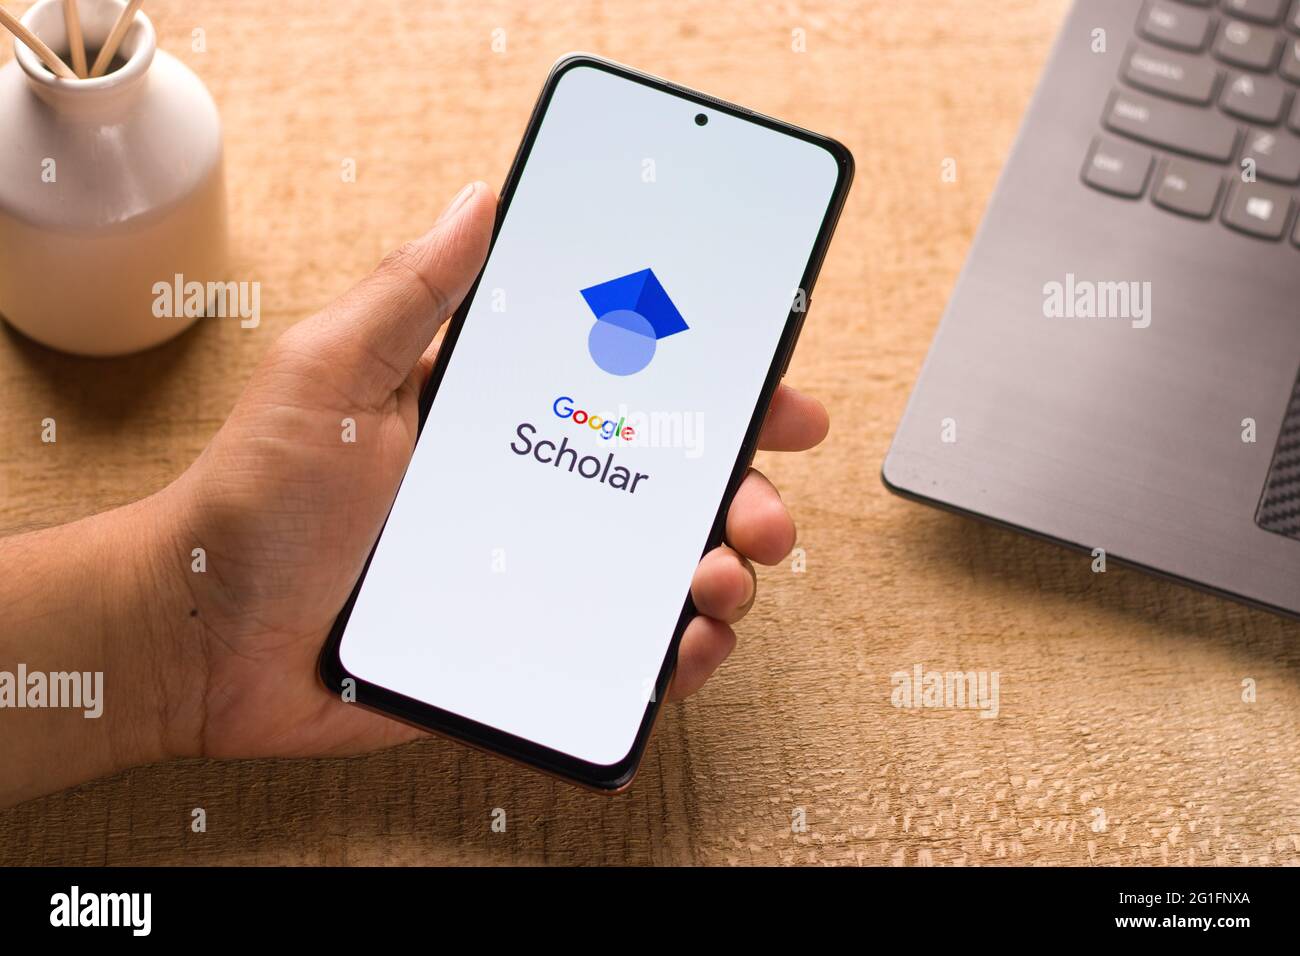 Assam, india - May 29, 2021 : Google Scholar app logo on phone screen stock image. Stock Photo